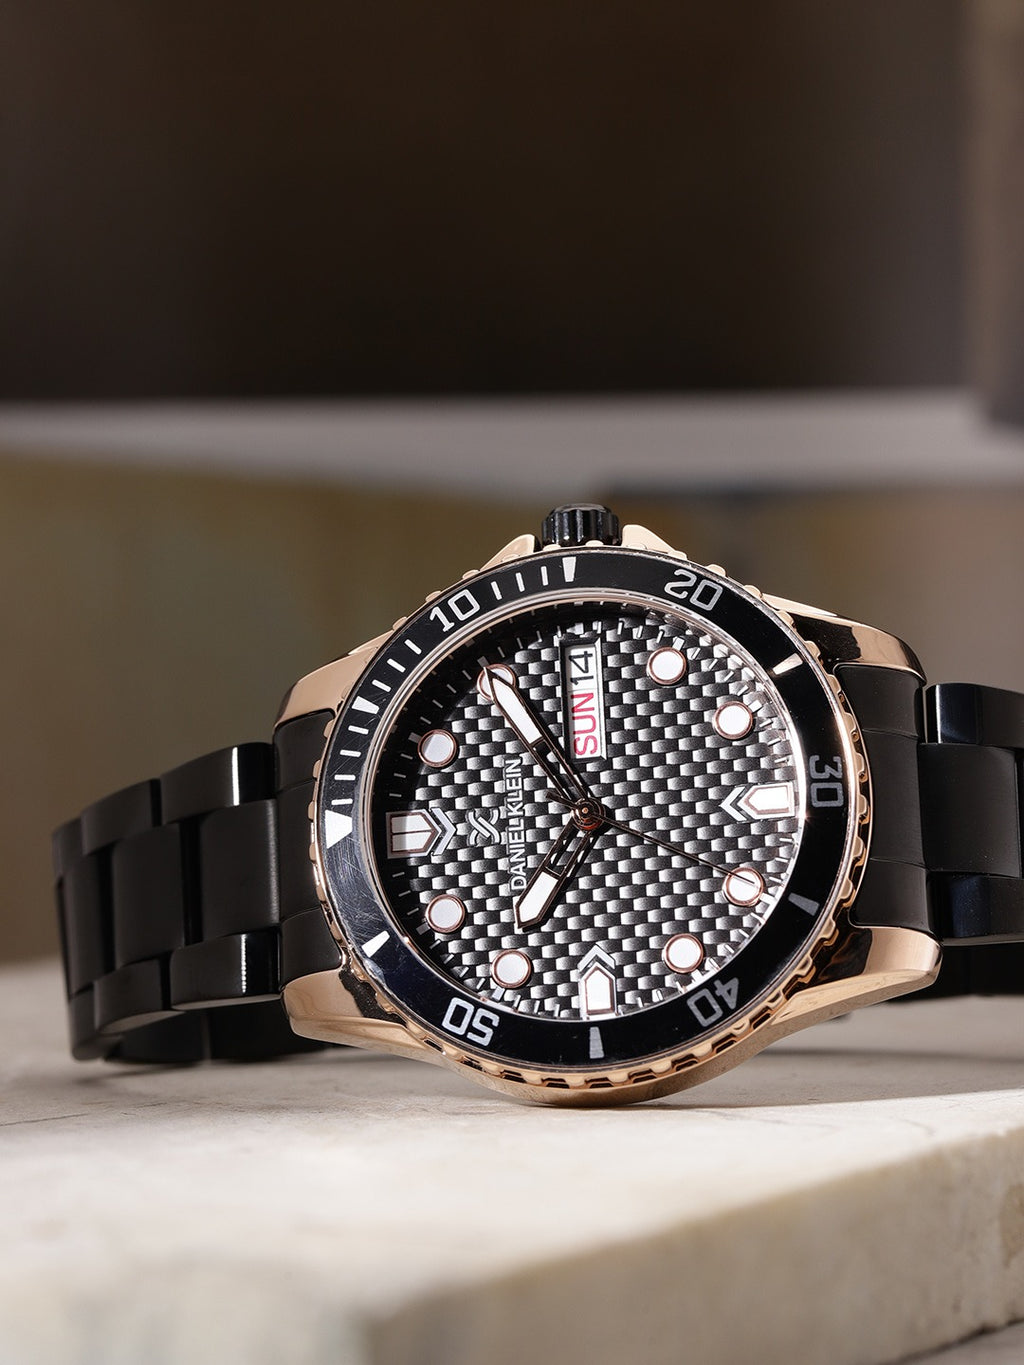 Daniel Klein Premium Men Black Watch: Buy Daniel Klein Premium Men Black  Watch Online at Best Price in India